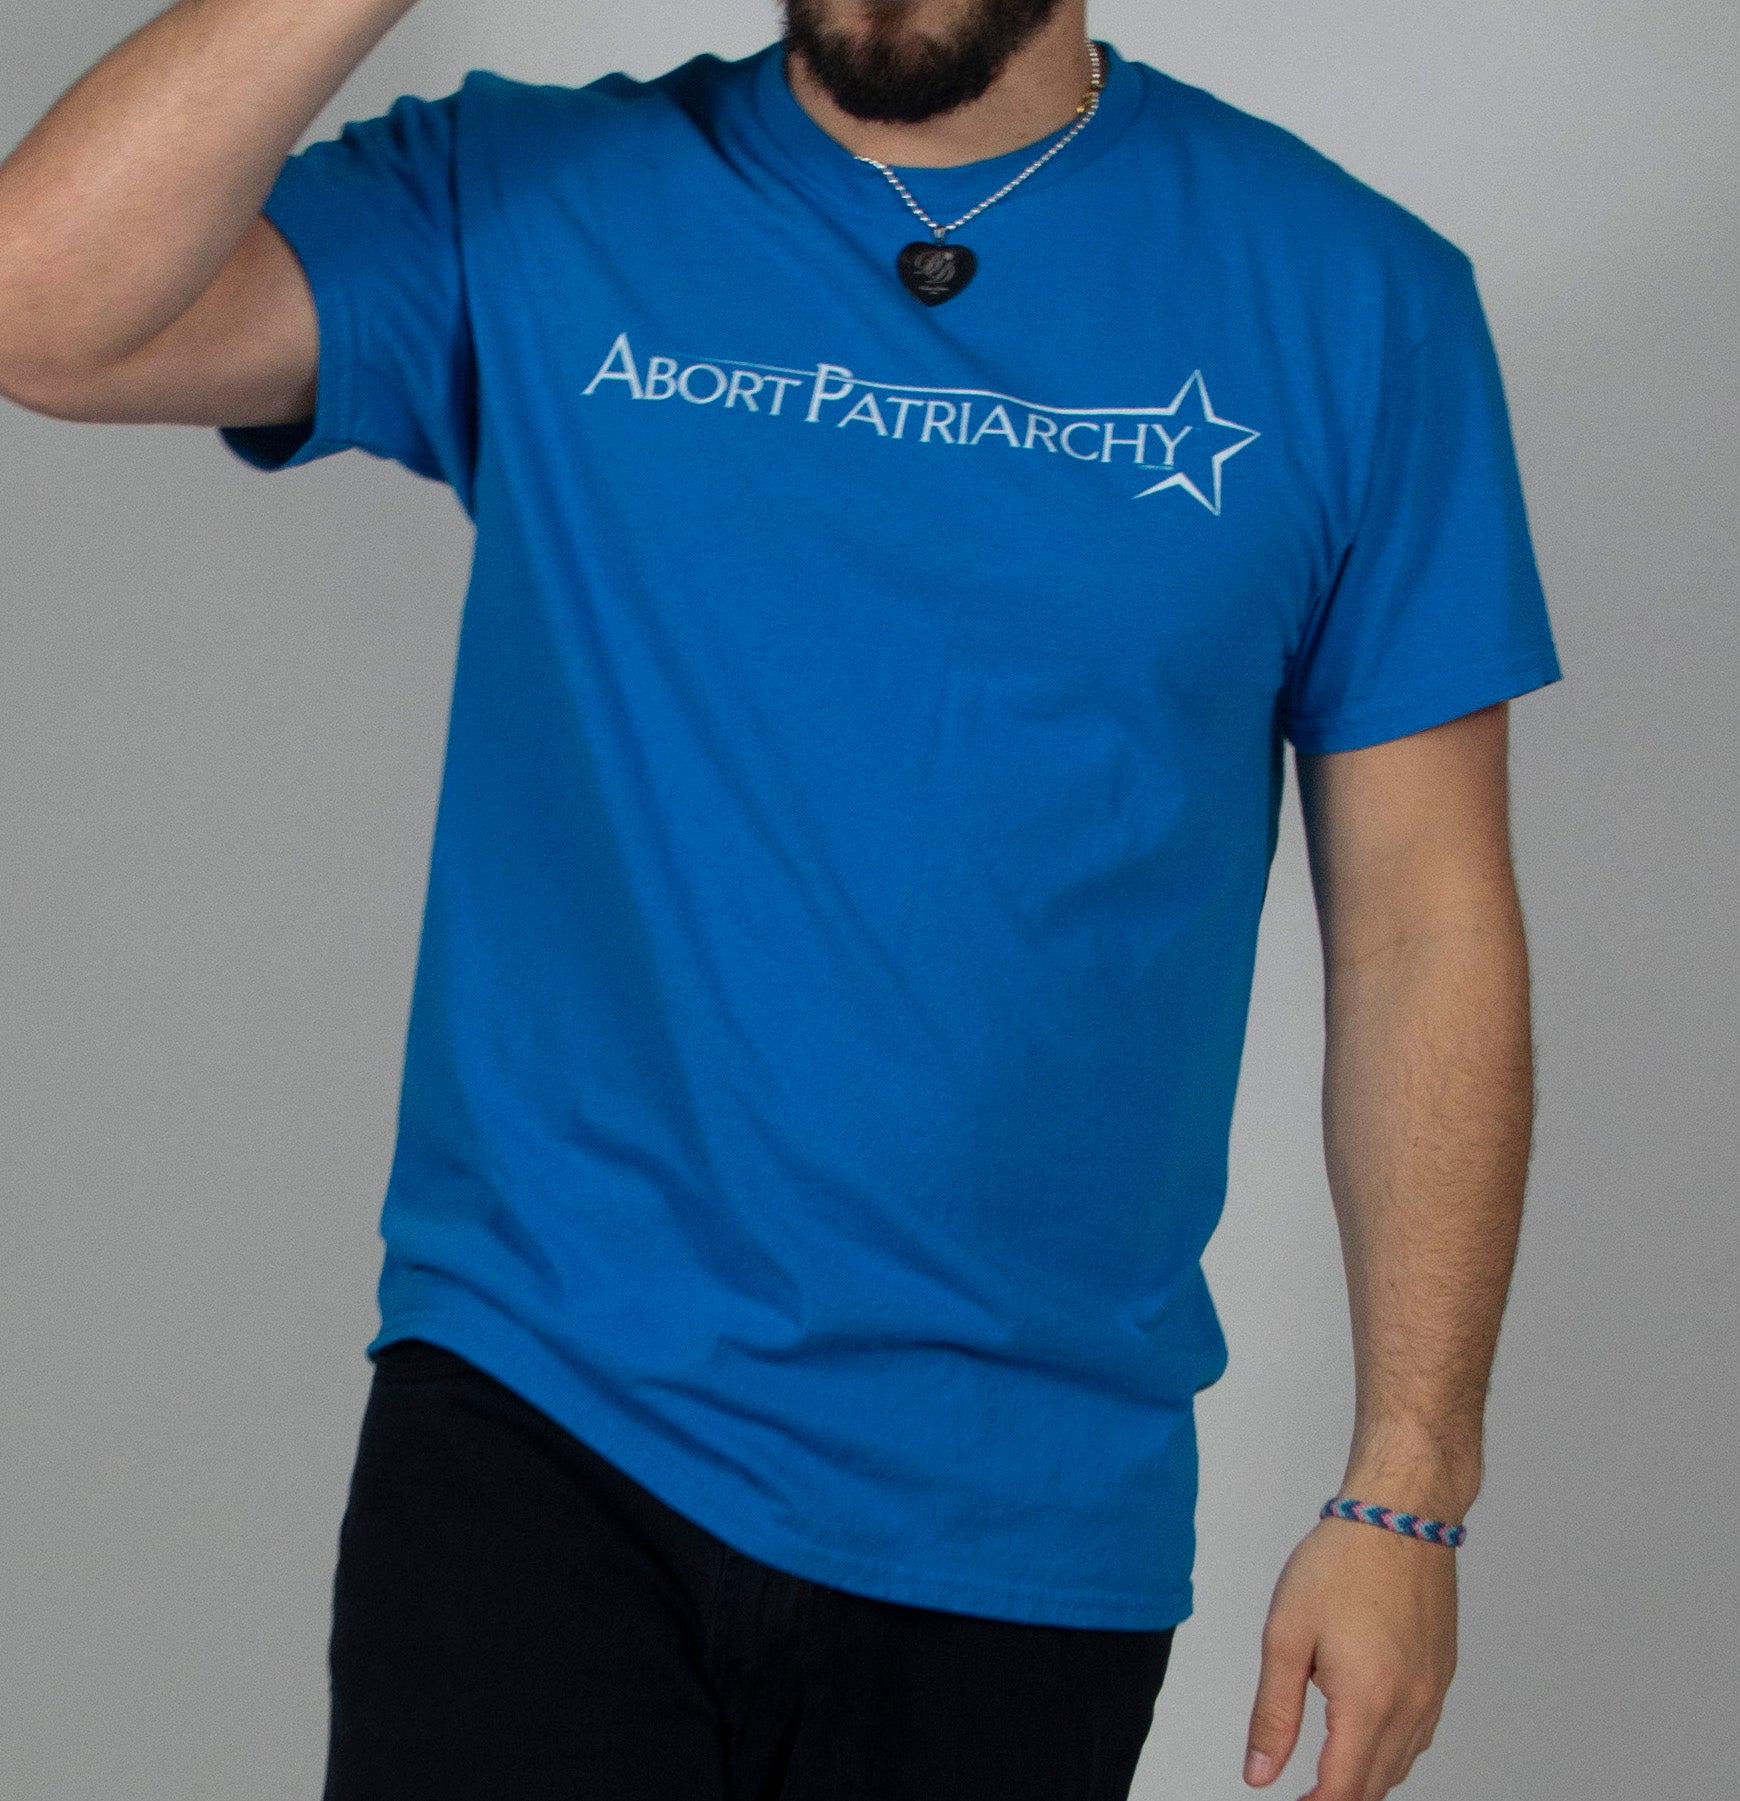 Abort Patriarchy Unisex T-Shirt (White/Blue)